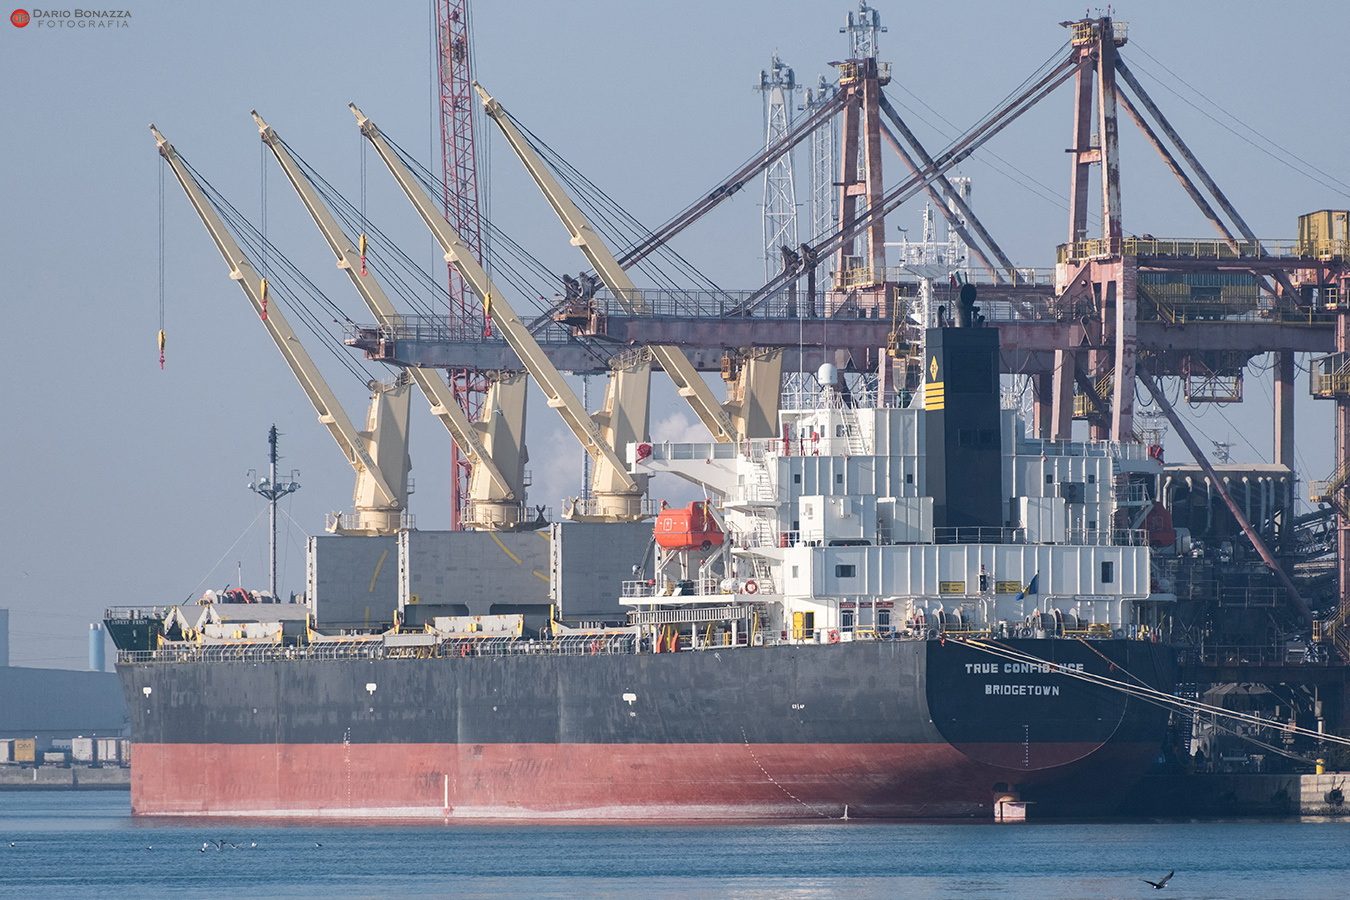 A view shows Barbados-flagged bulk carrier vessel True Confidence, in Ravenna, Italy March 10, 2022. Dario Bonazza/via REUTERS